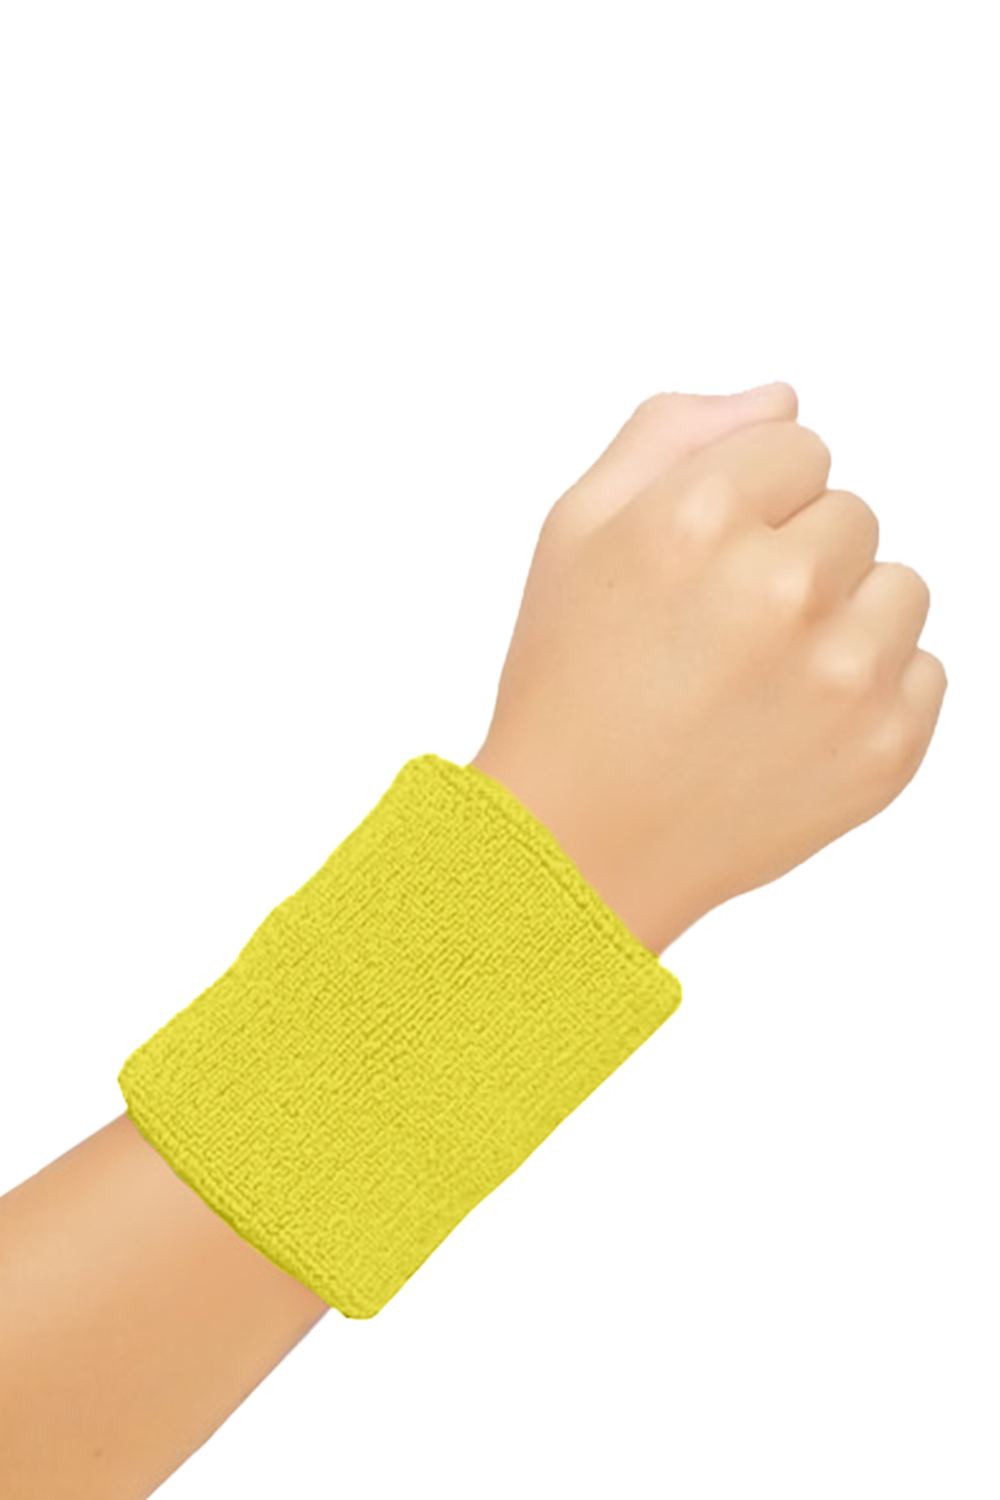 Wickedfun Yellow Towelling Wrist Band (12 Pairs)